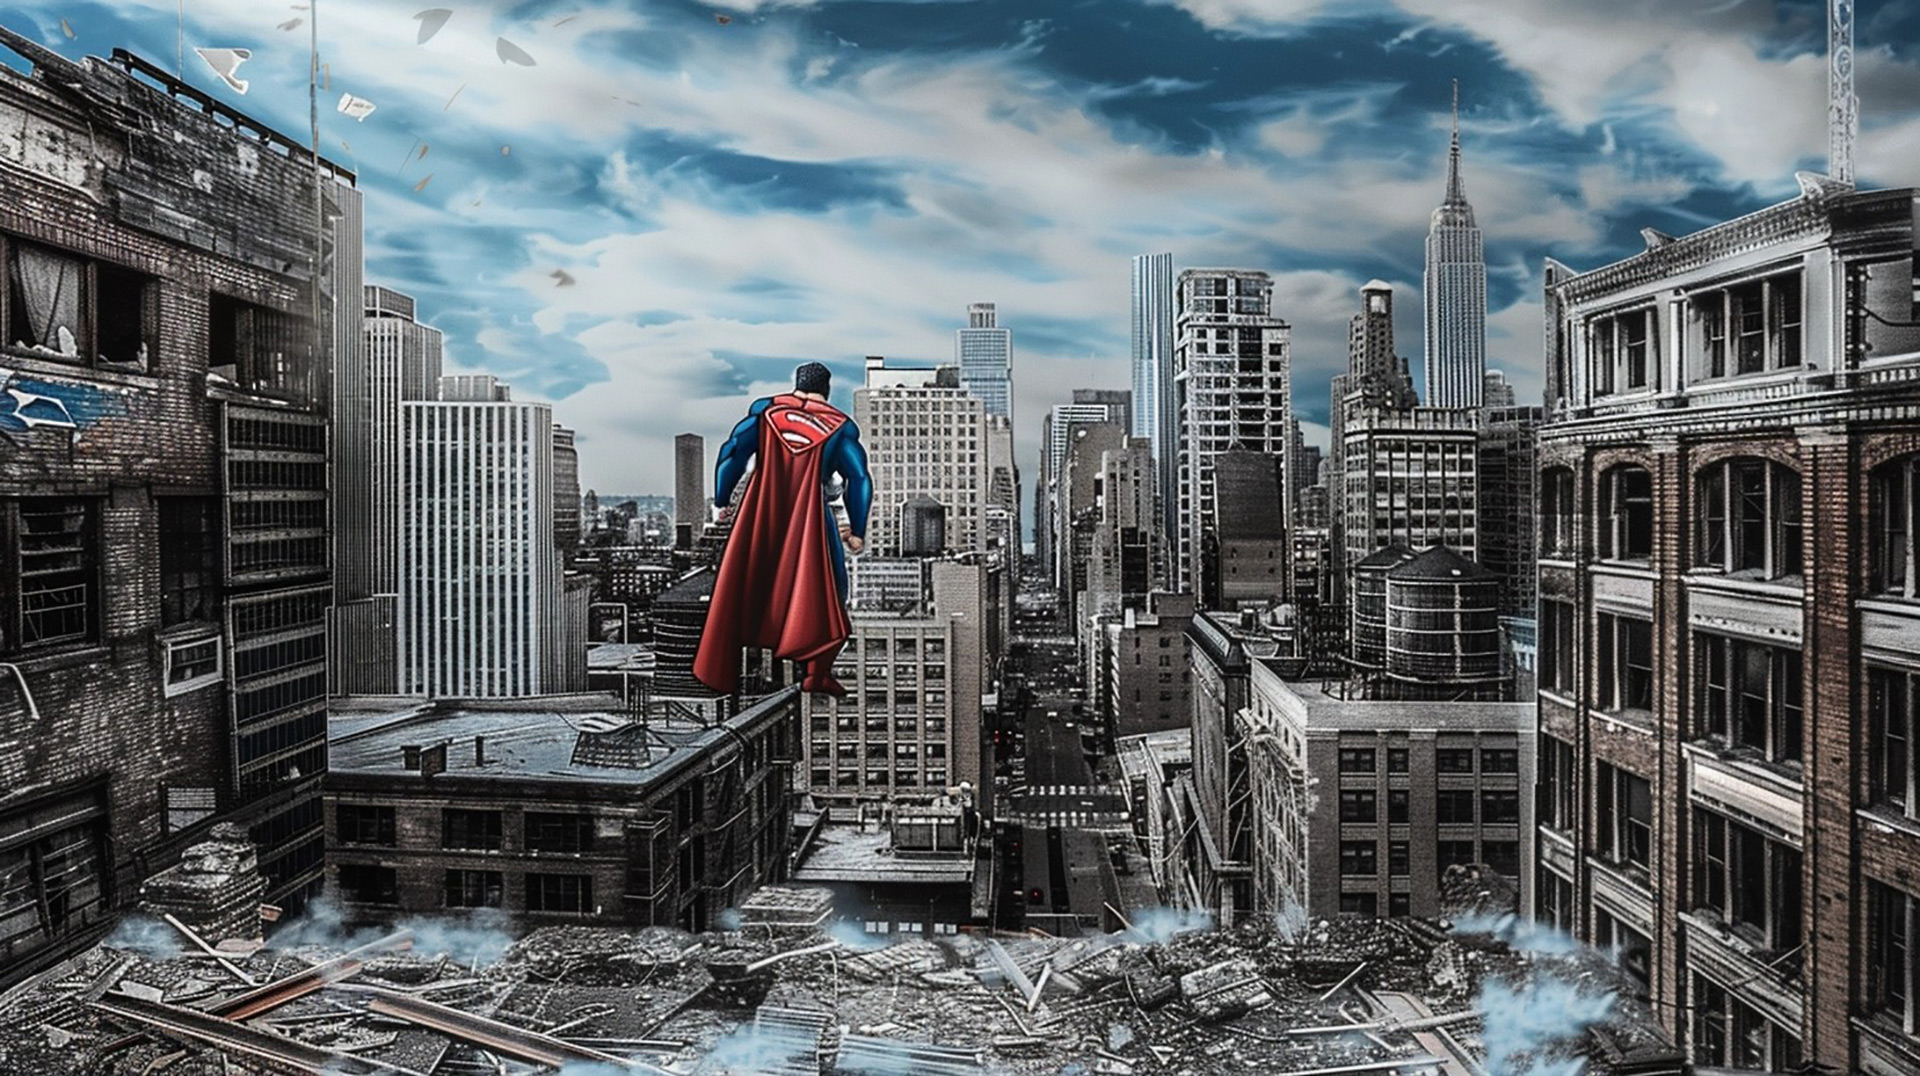 Man of Steel: Dynamic Superman Images in 4K